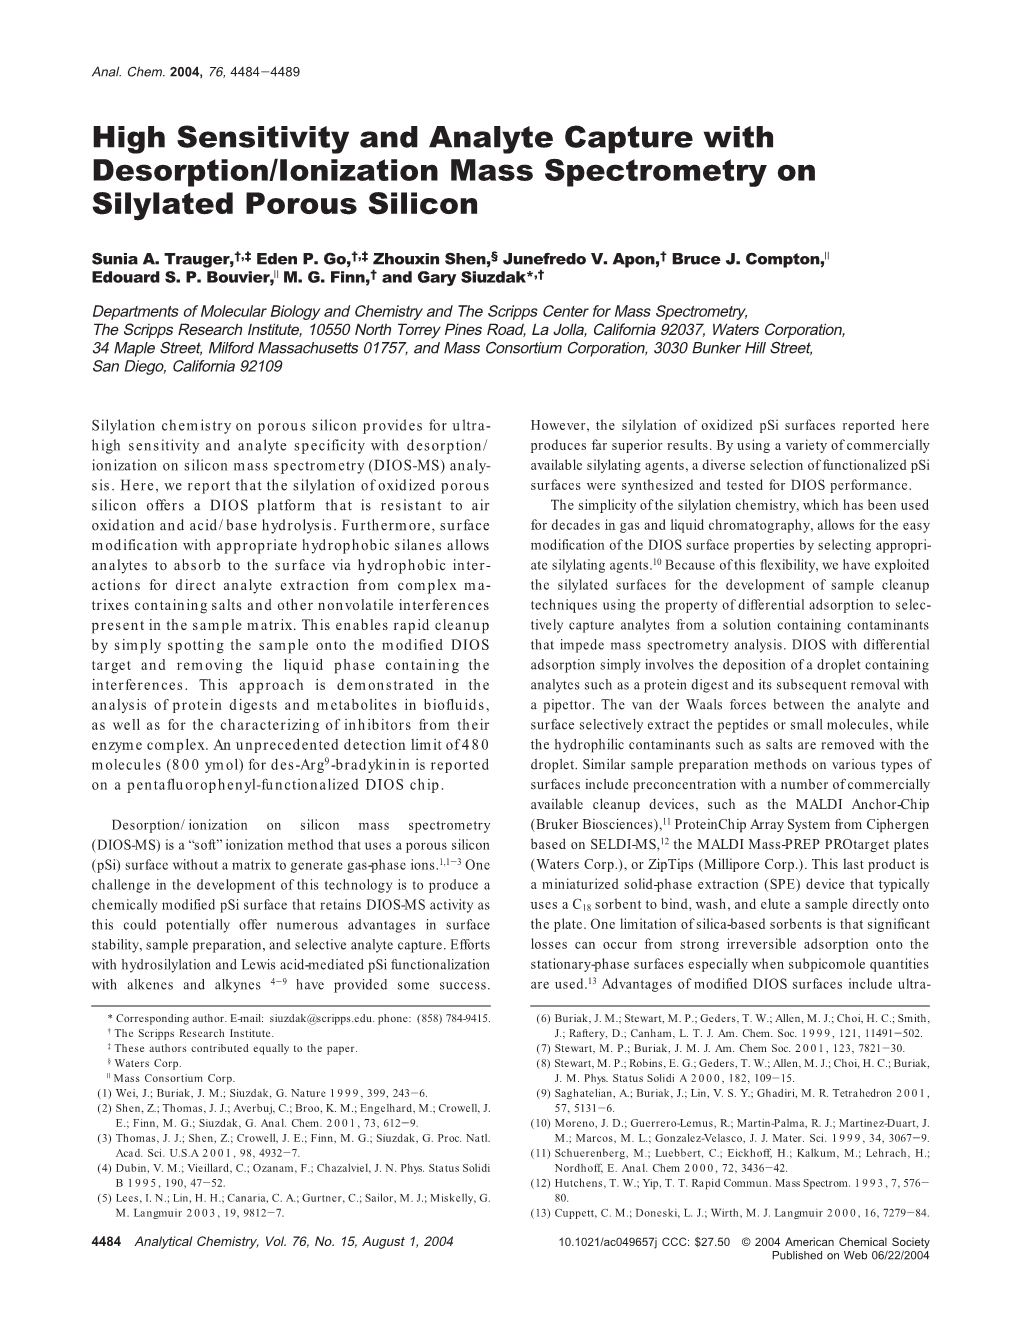 High Sensitivity and Analyte Capture with Desorption/Ionization Mass Spectrometry on Silylated Porous Silicon